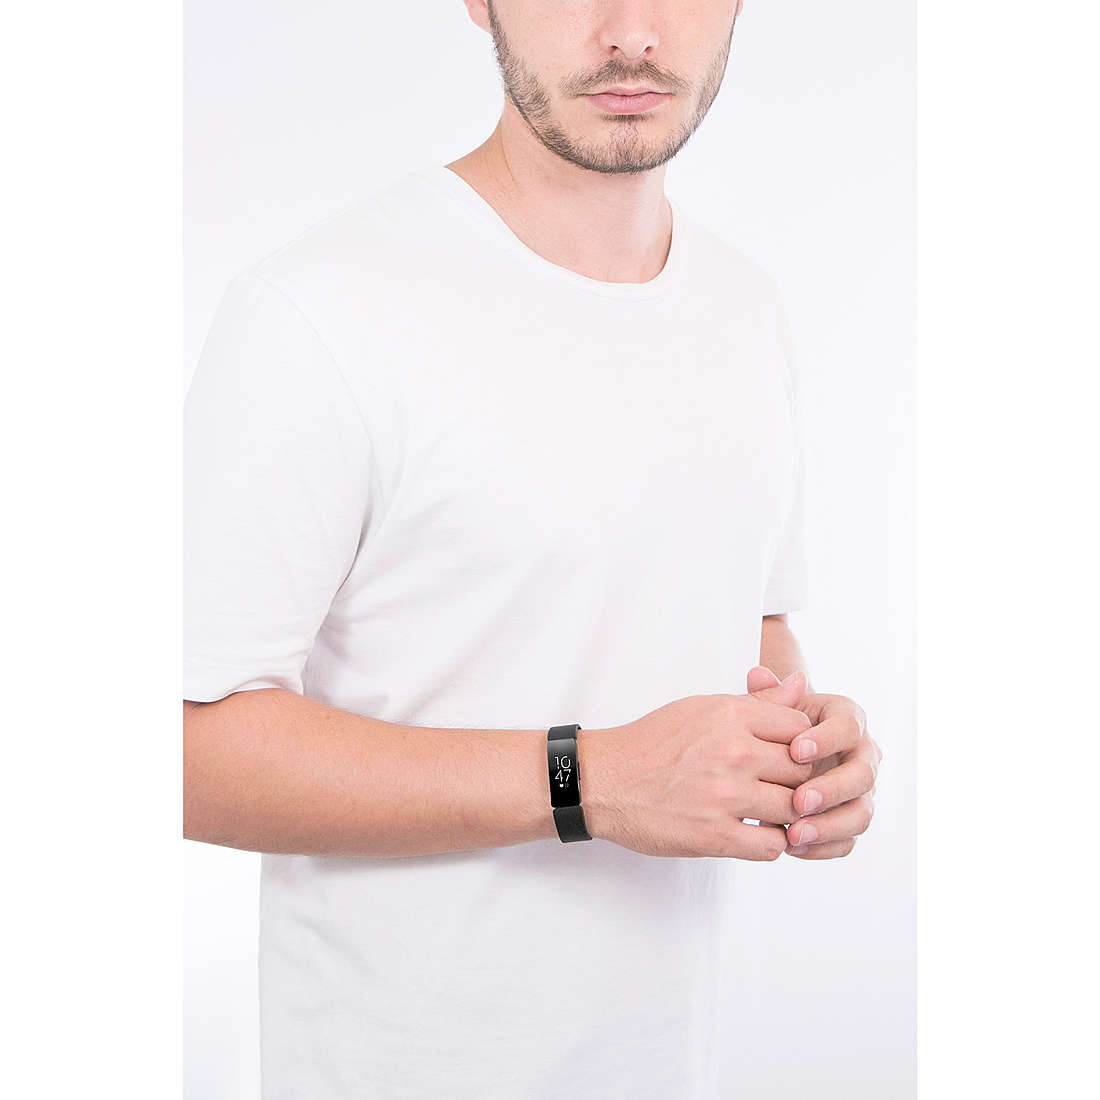 Fitbit digitali Inspire uomo FB413BKBK indosso